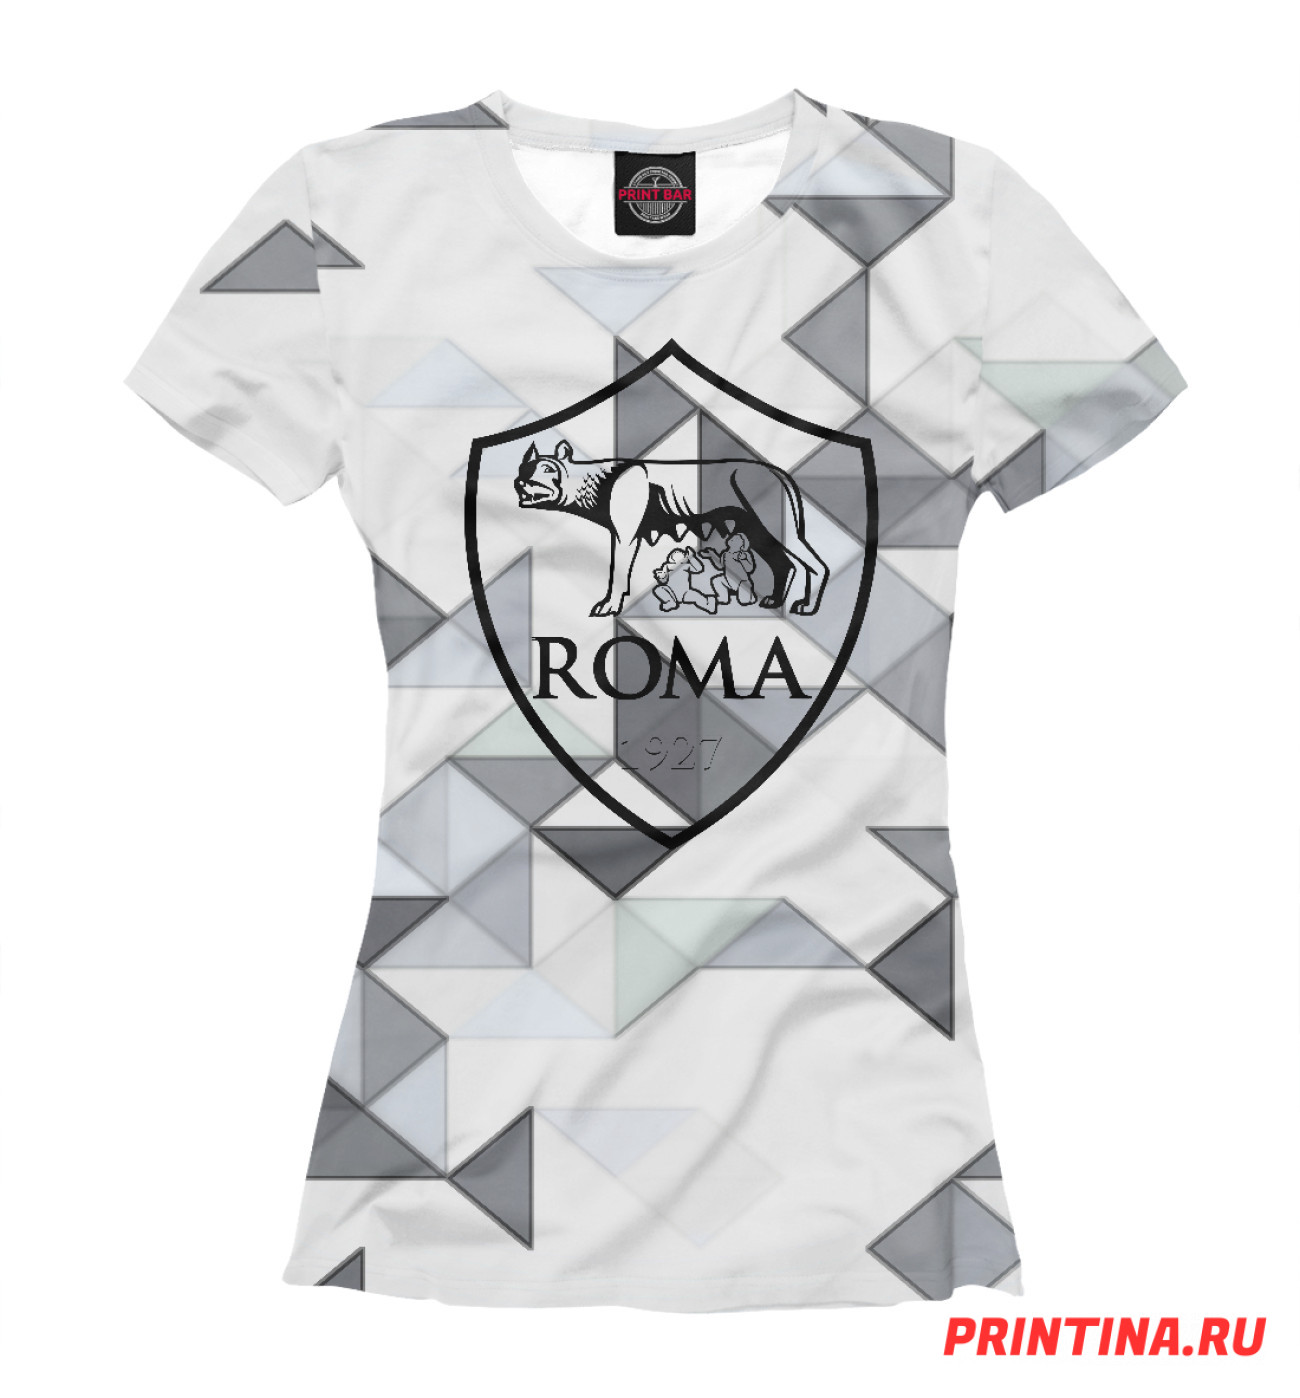 Женская Футболка ROMA, артикул: RMA-501958-fut-1